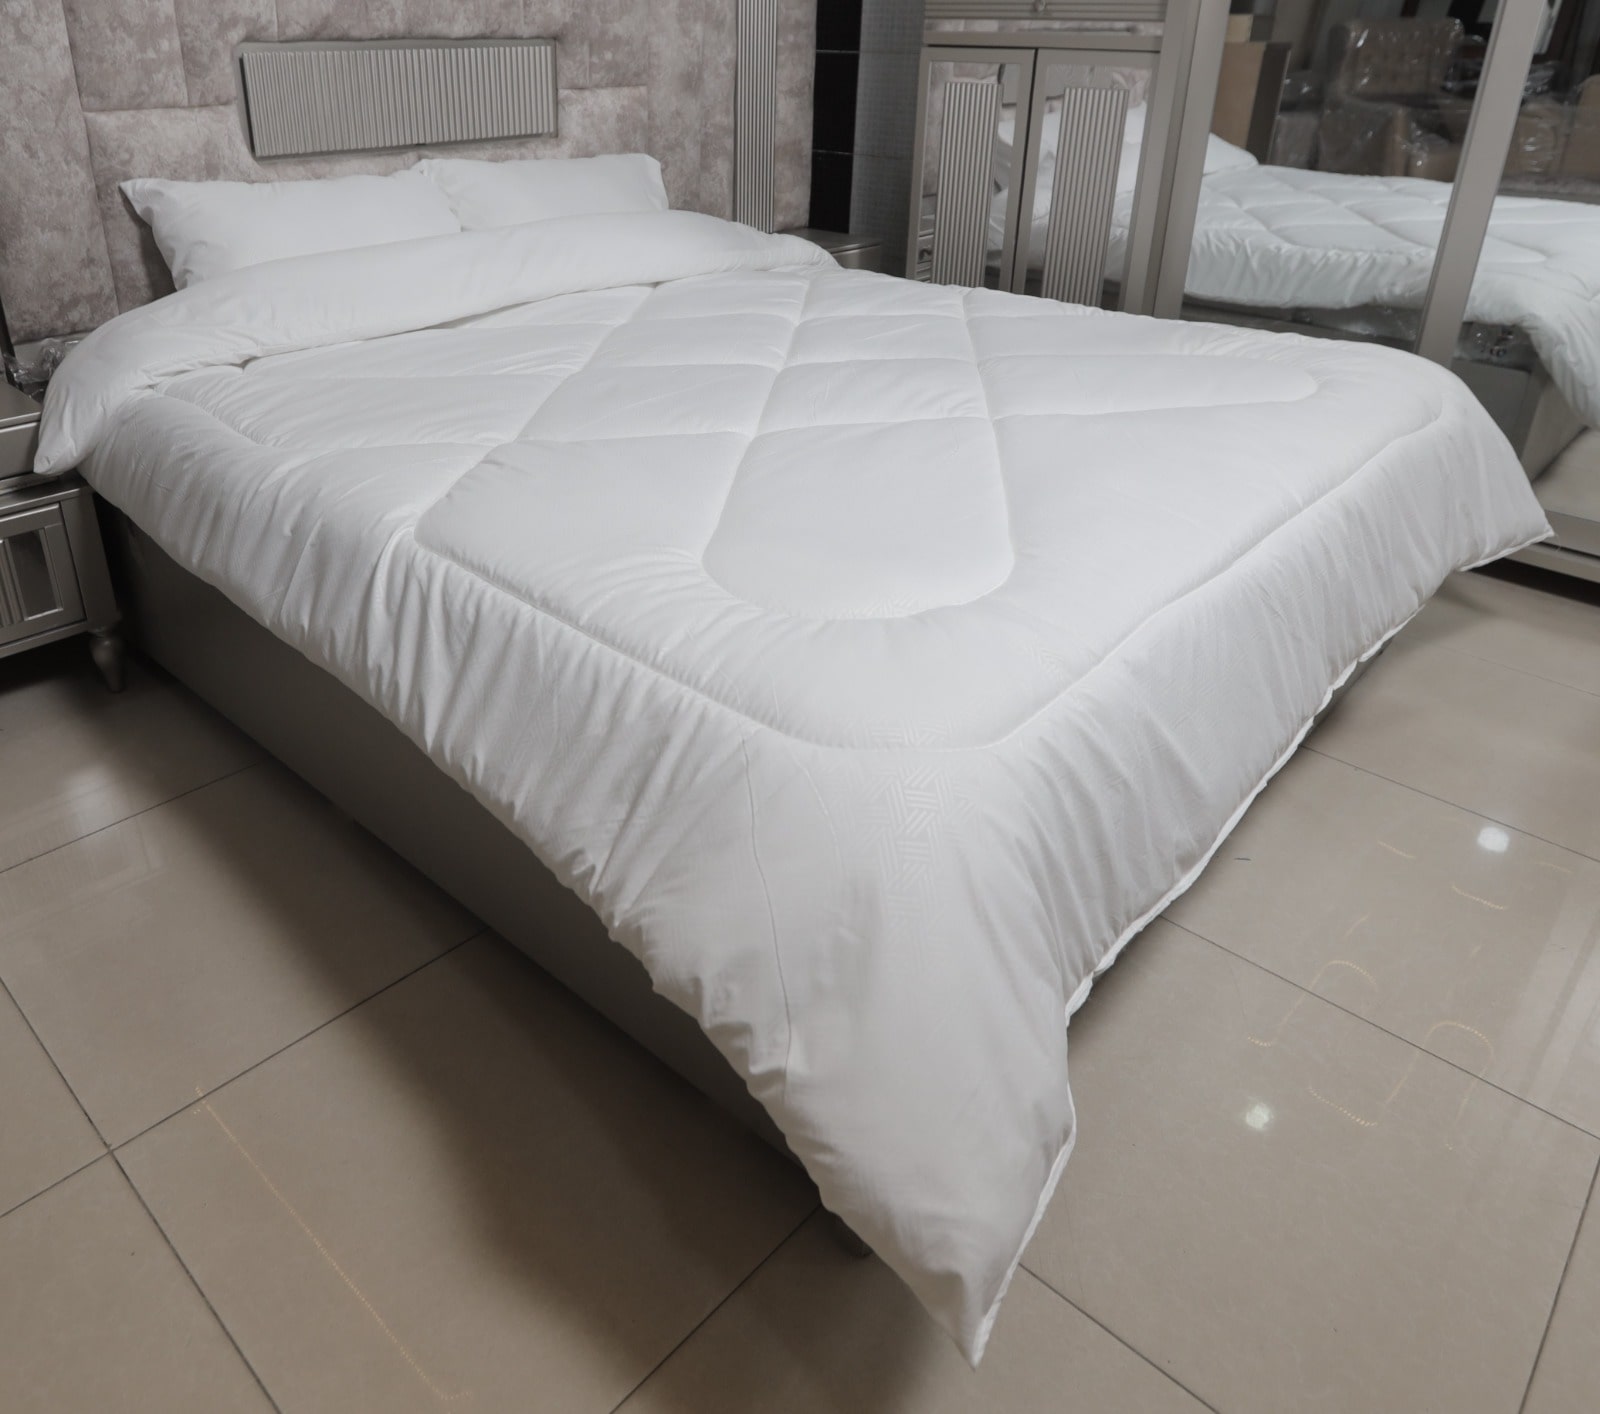 Single Size Comforter in White